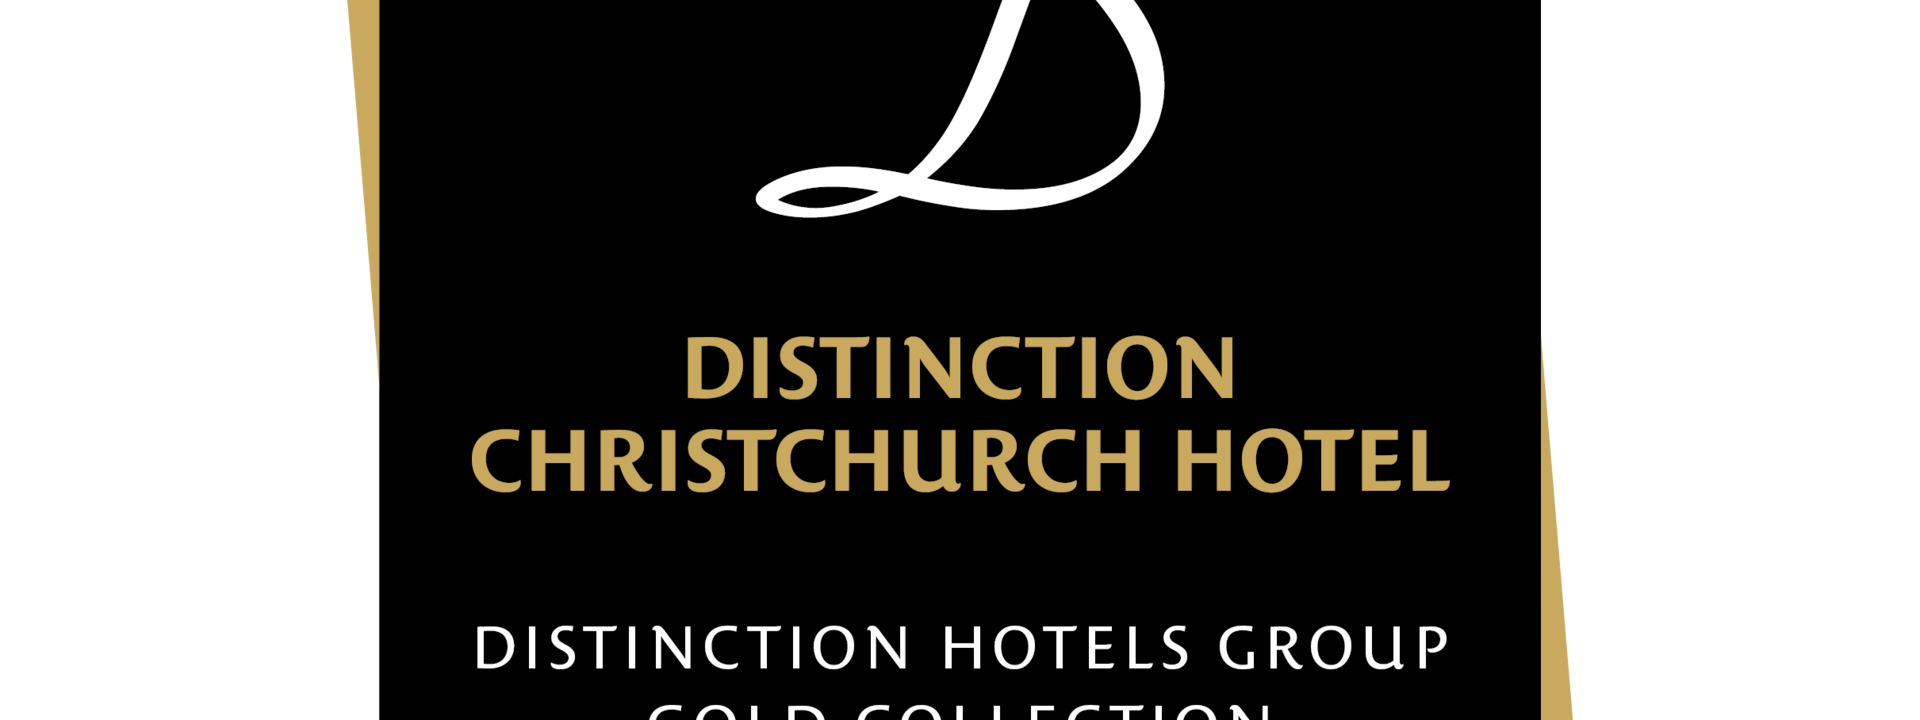 Distinction Christchurch Hotel logo4 PNG.png